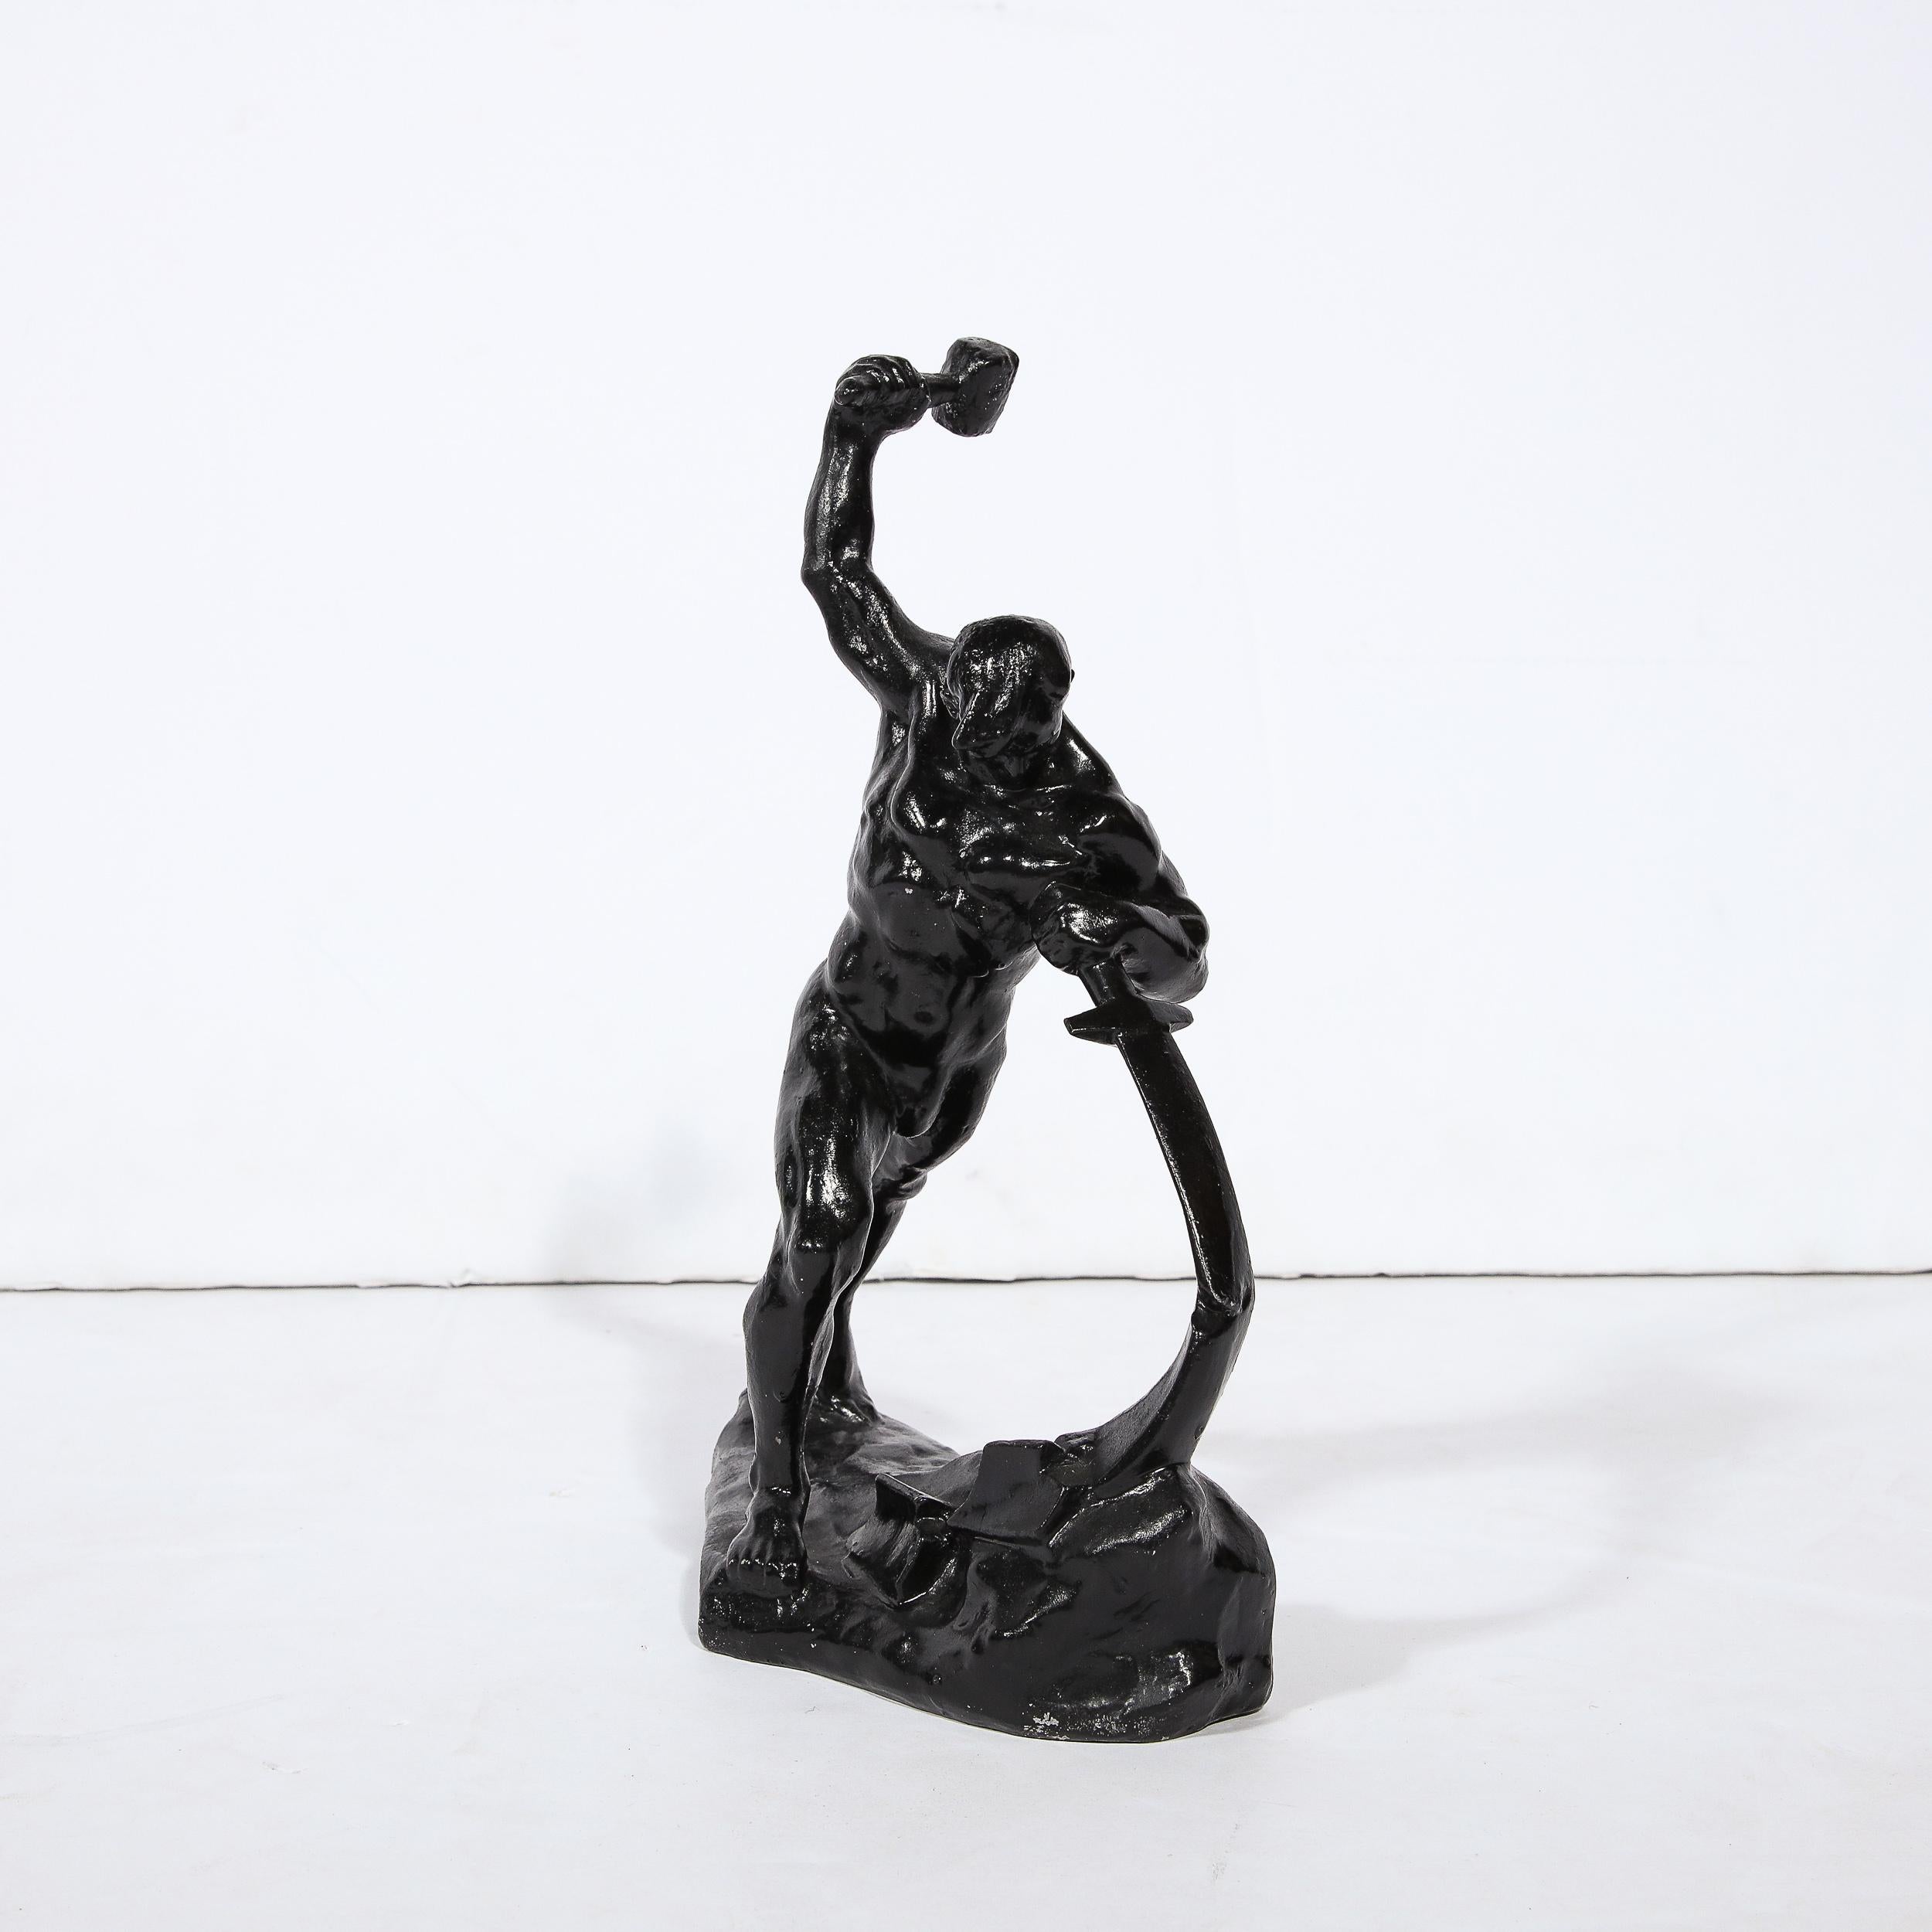 Belarusian Modernist 20th Century Soviet Russian Nude Male Sculpture in Blackened Bronze For Sale